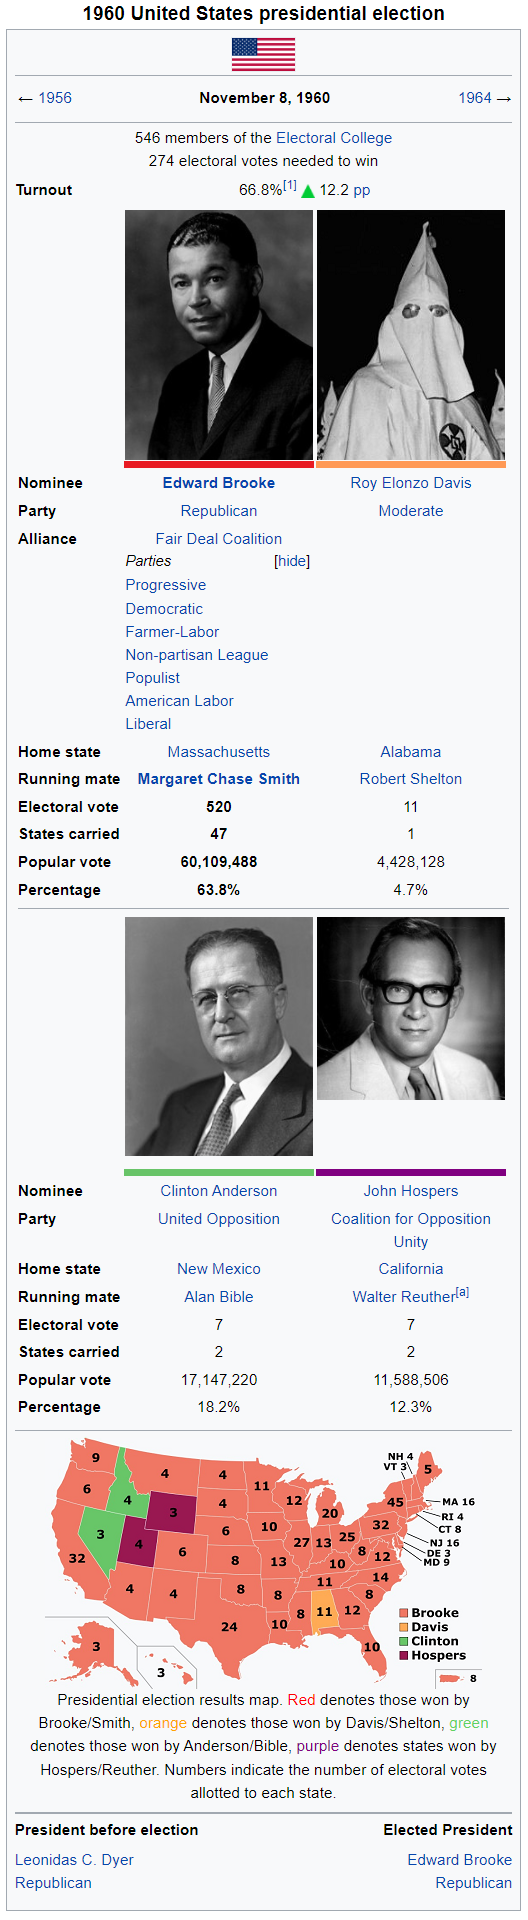 1960 election ib.png